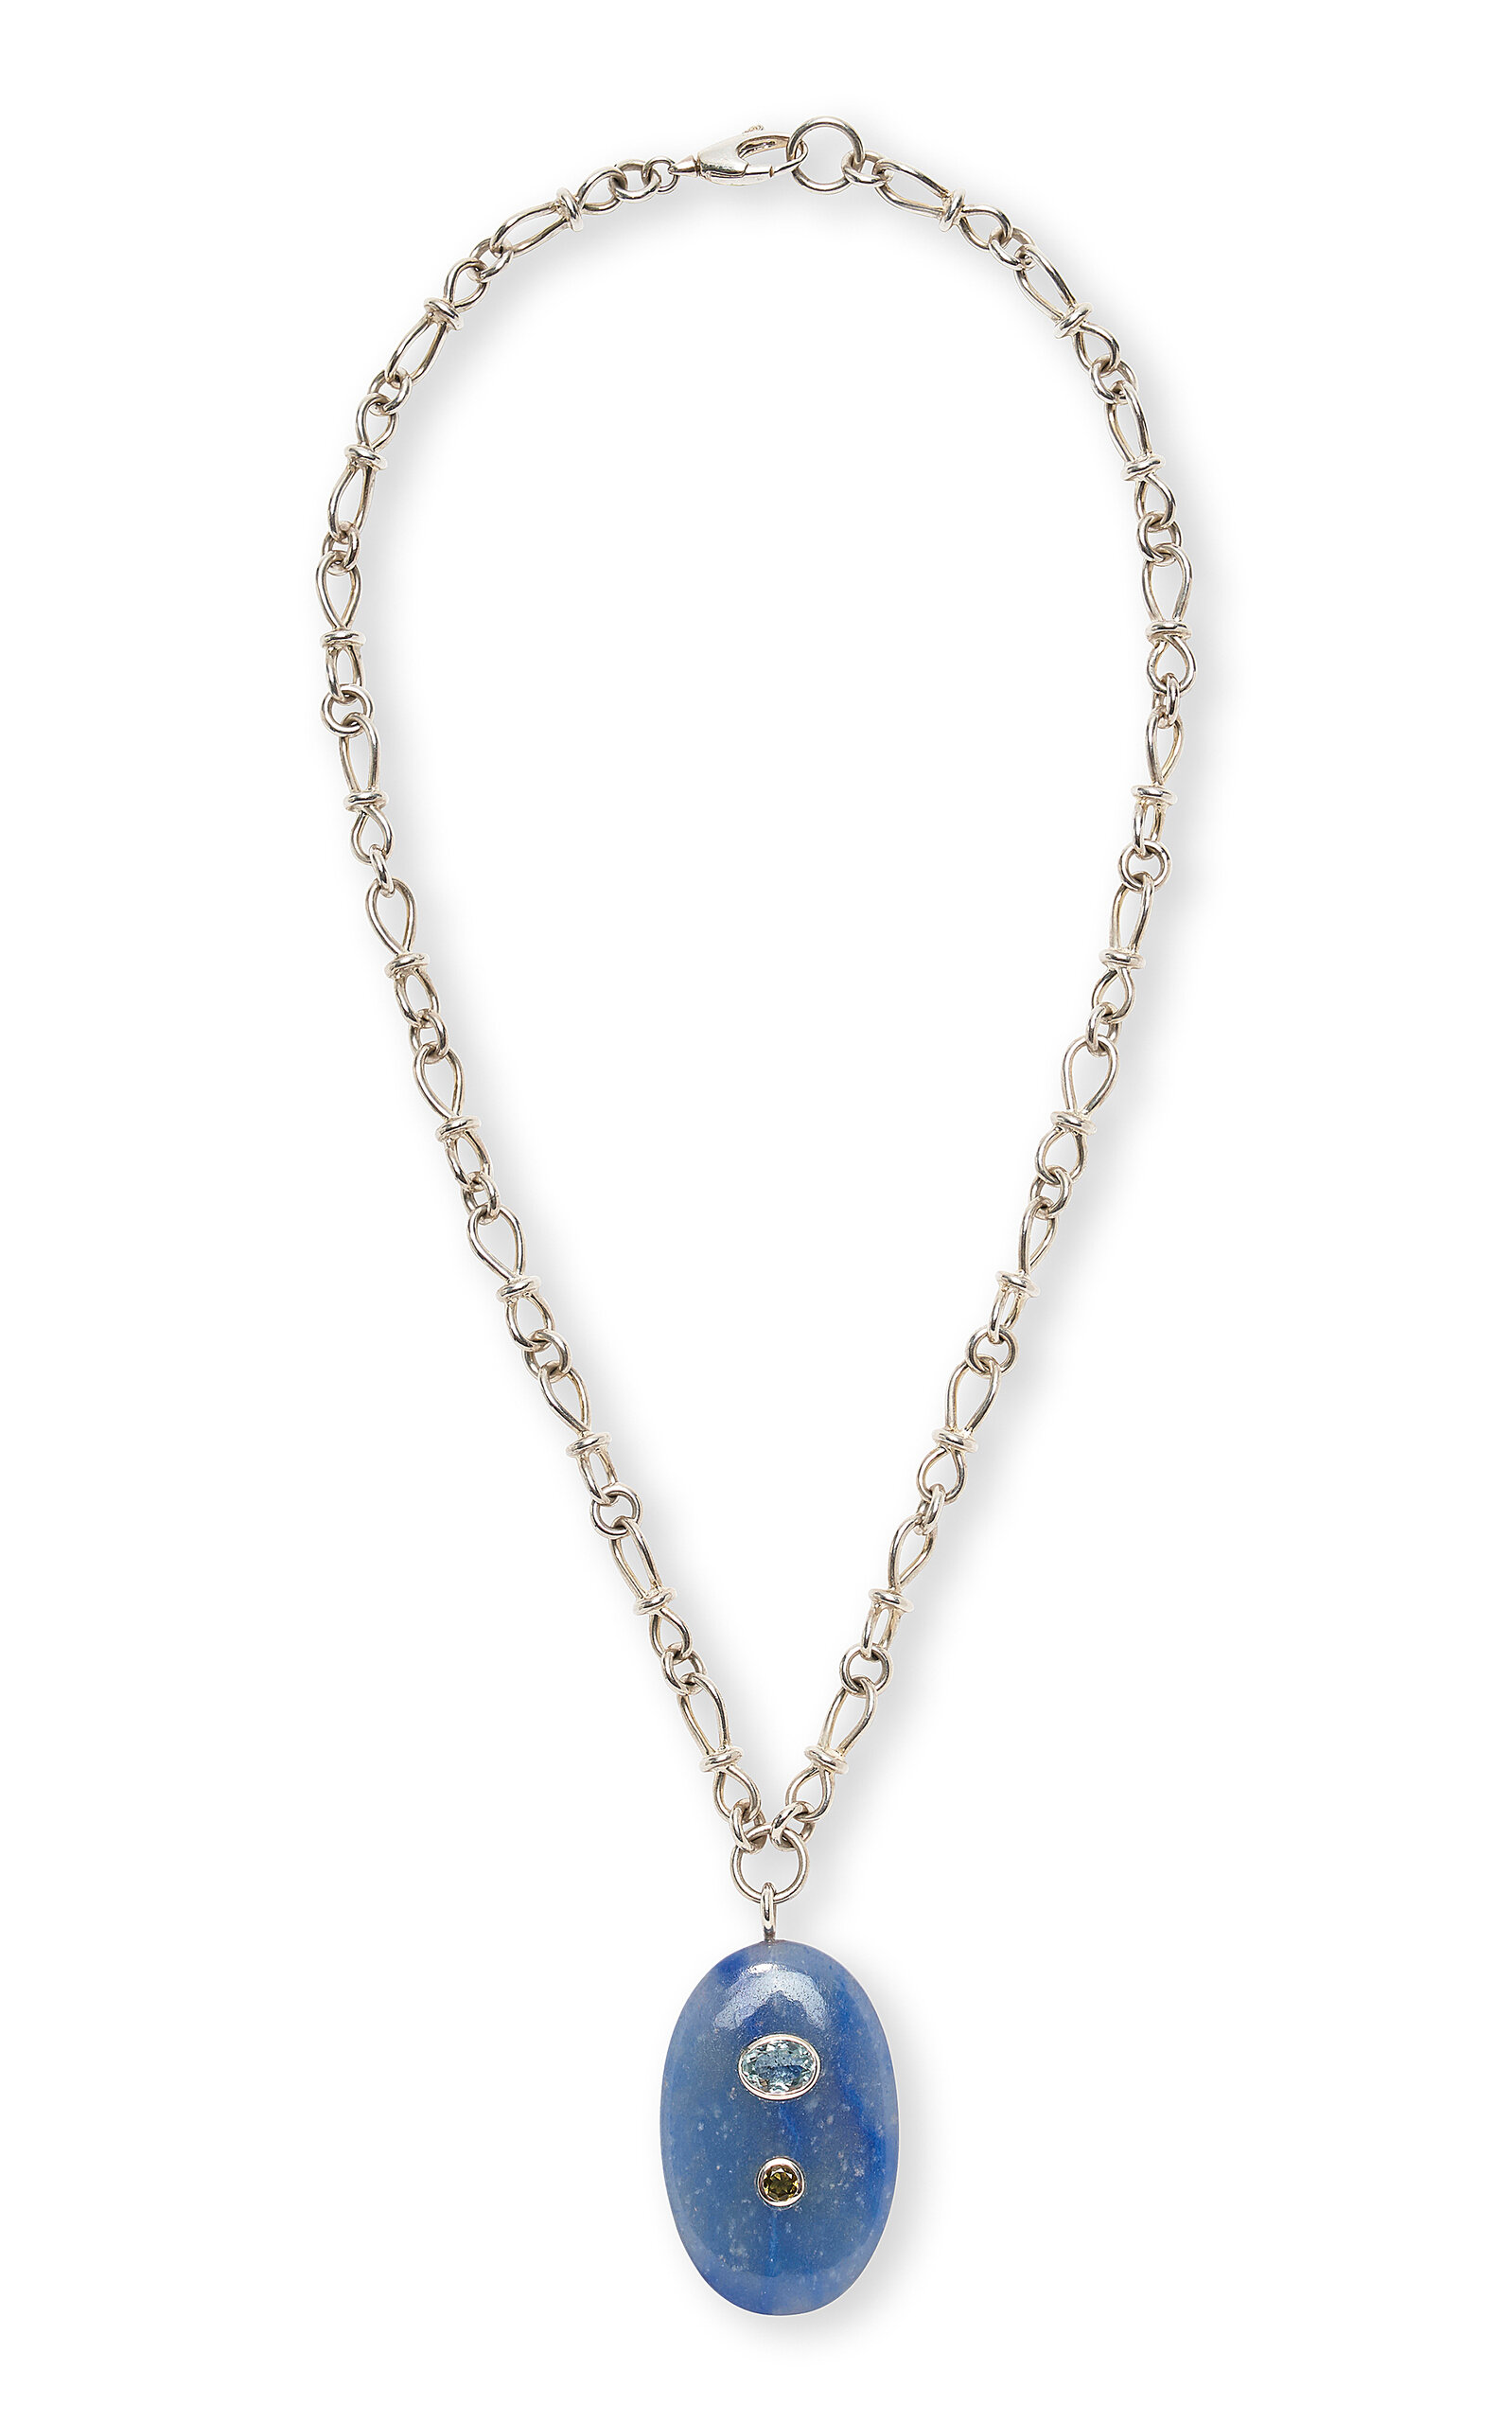 Exclusive Blue Quartz and Sterling Silver Pendant Necklace